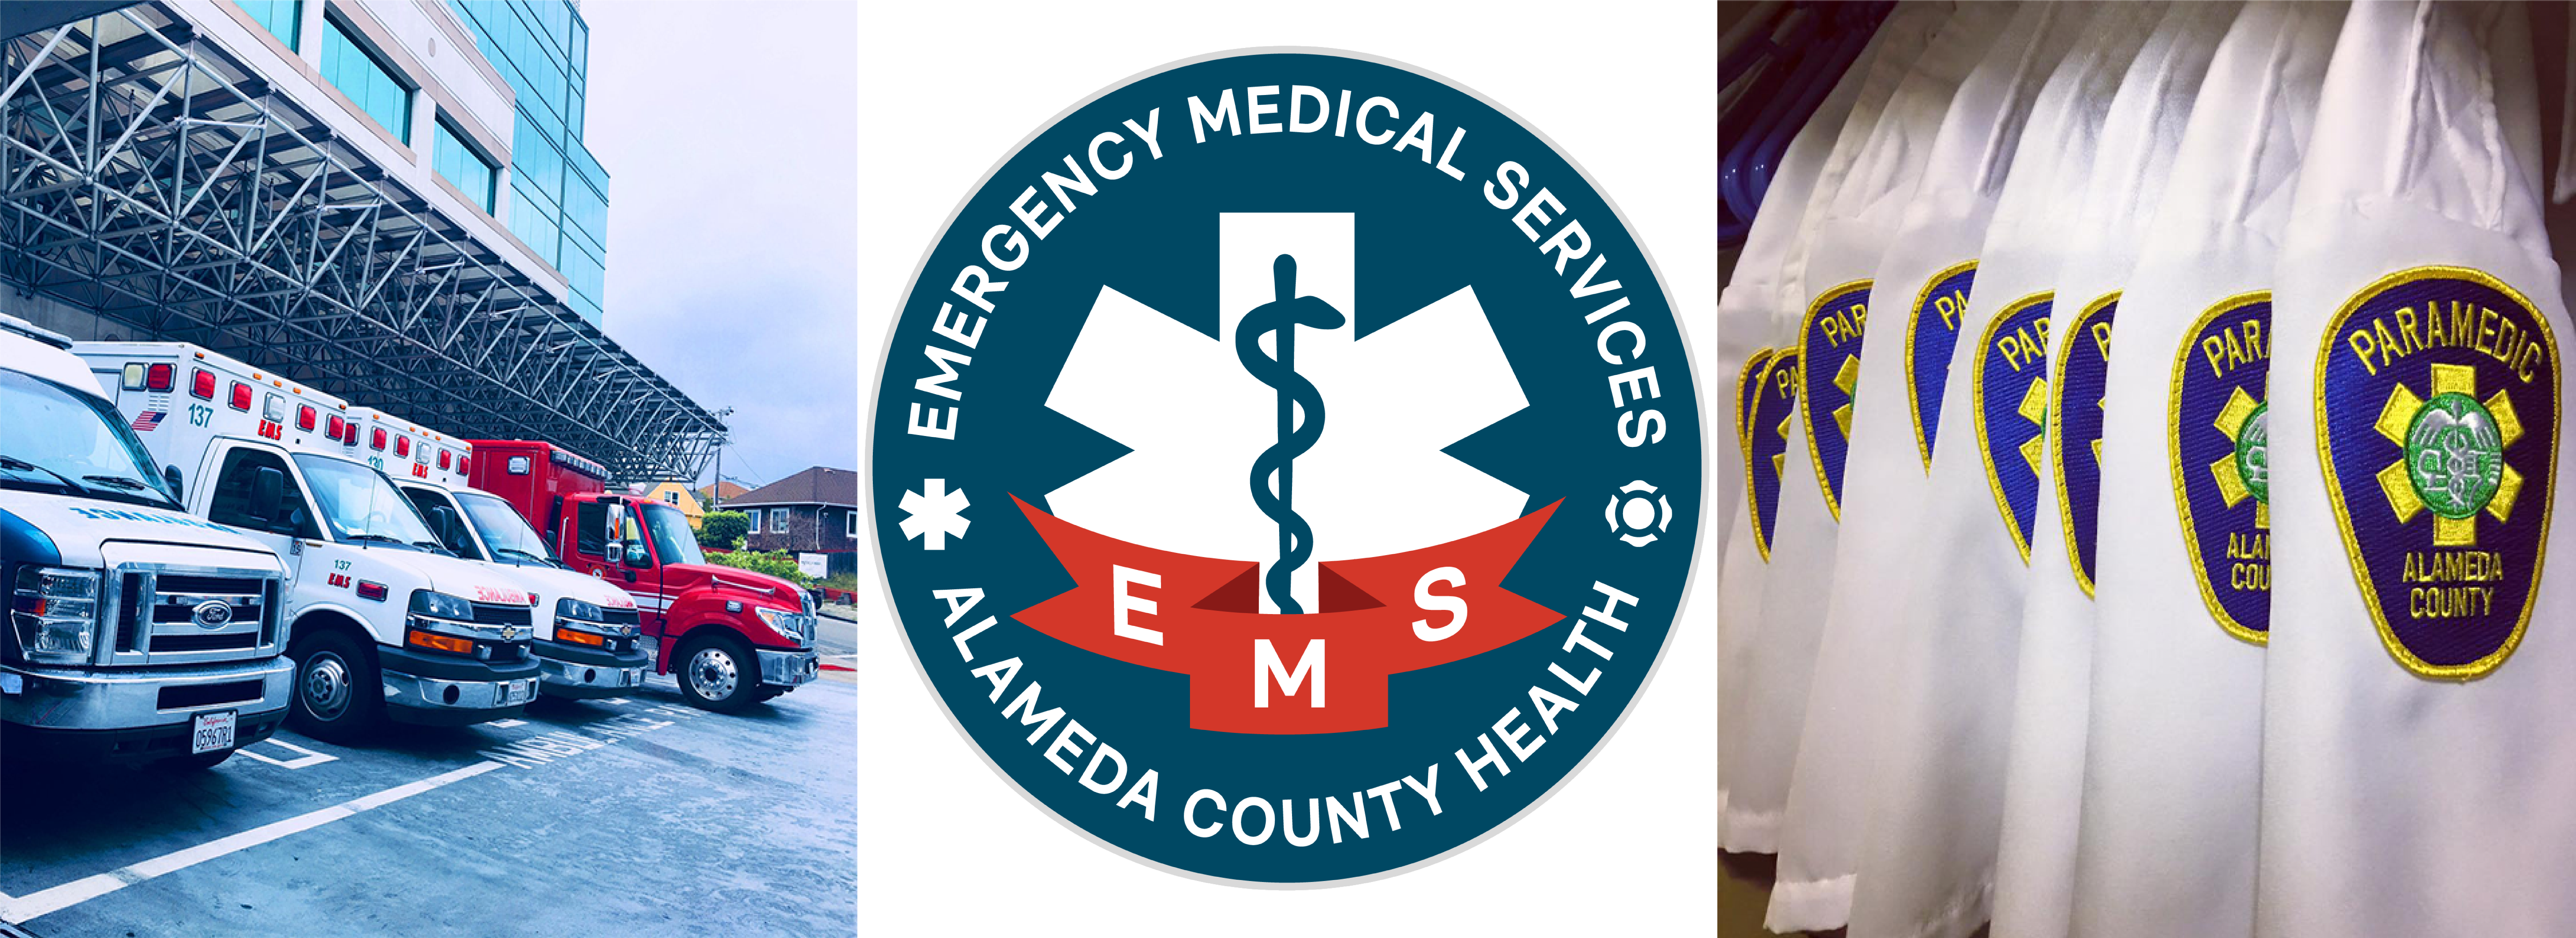 ambulances, Alameda County EMS logo, paramedic uniforms